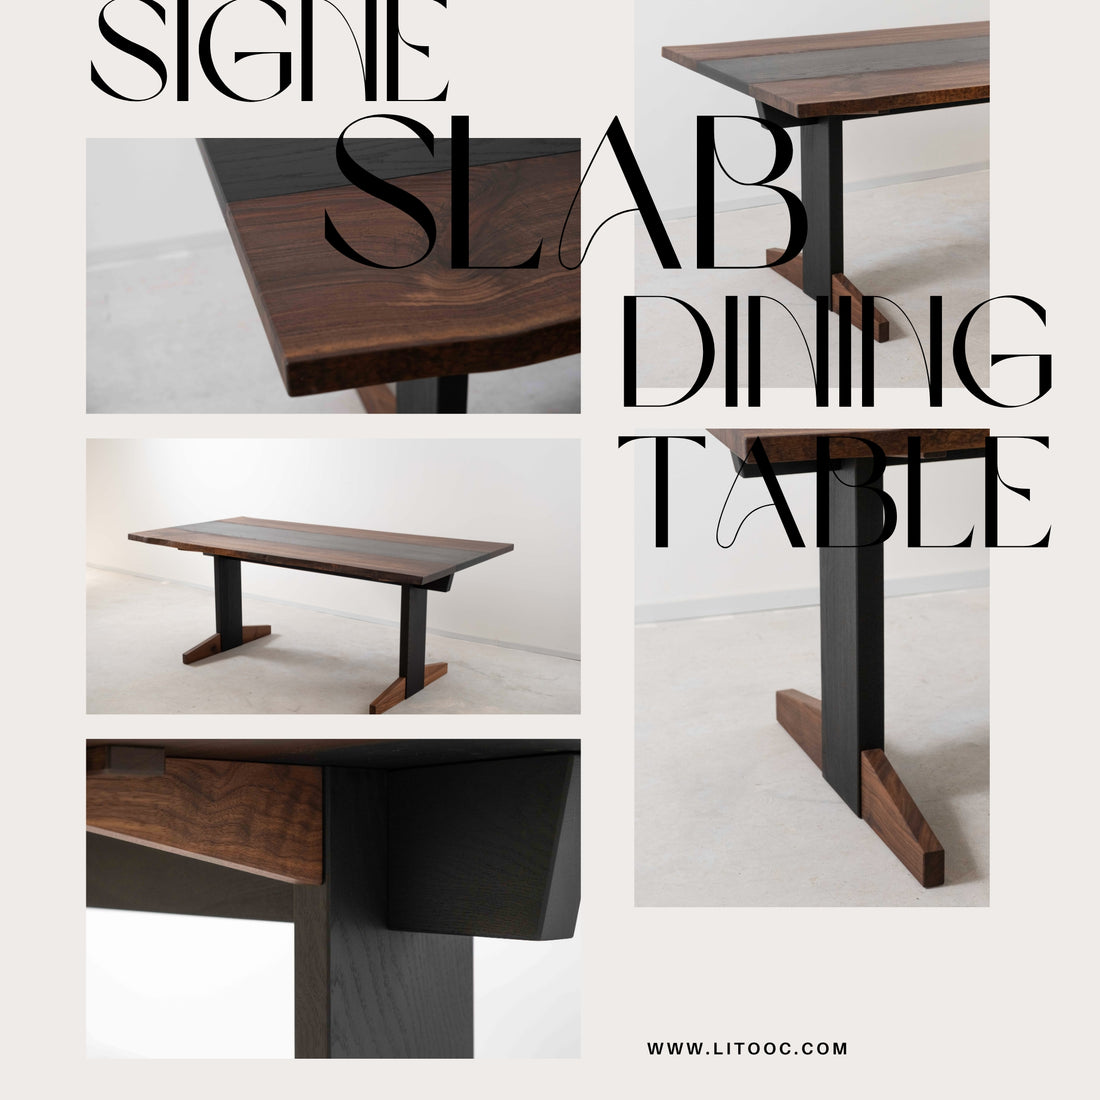 Signe Slab Dining Table